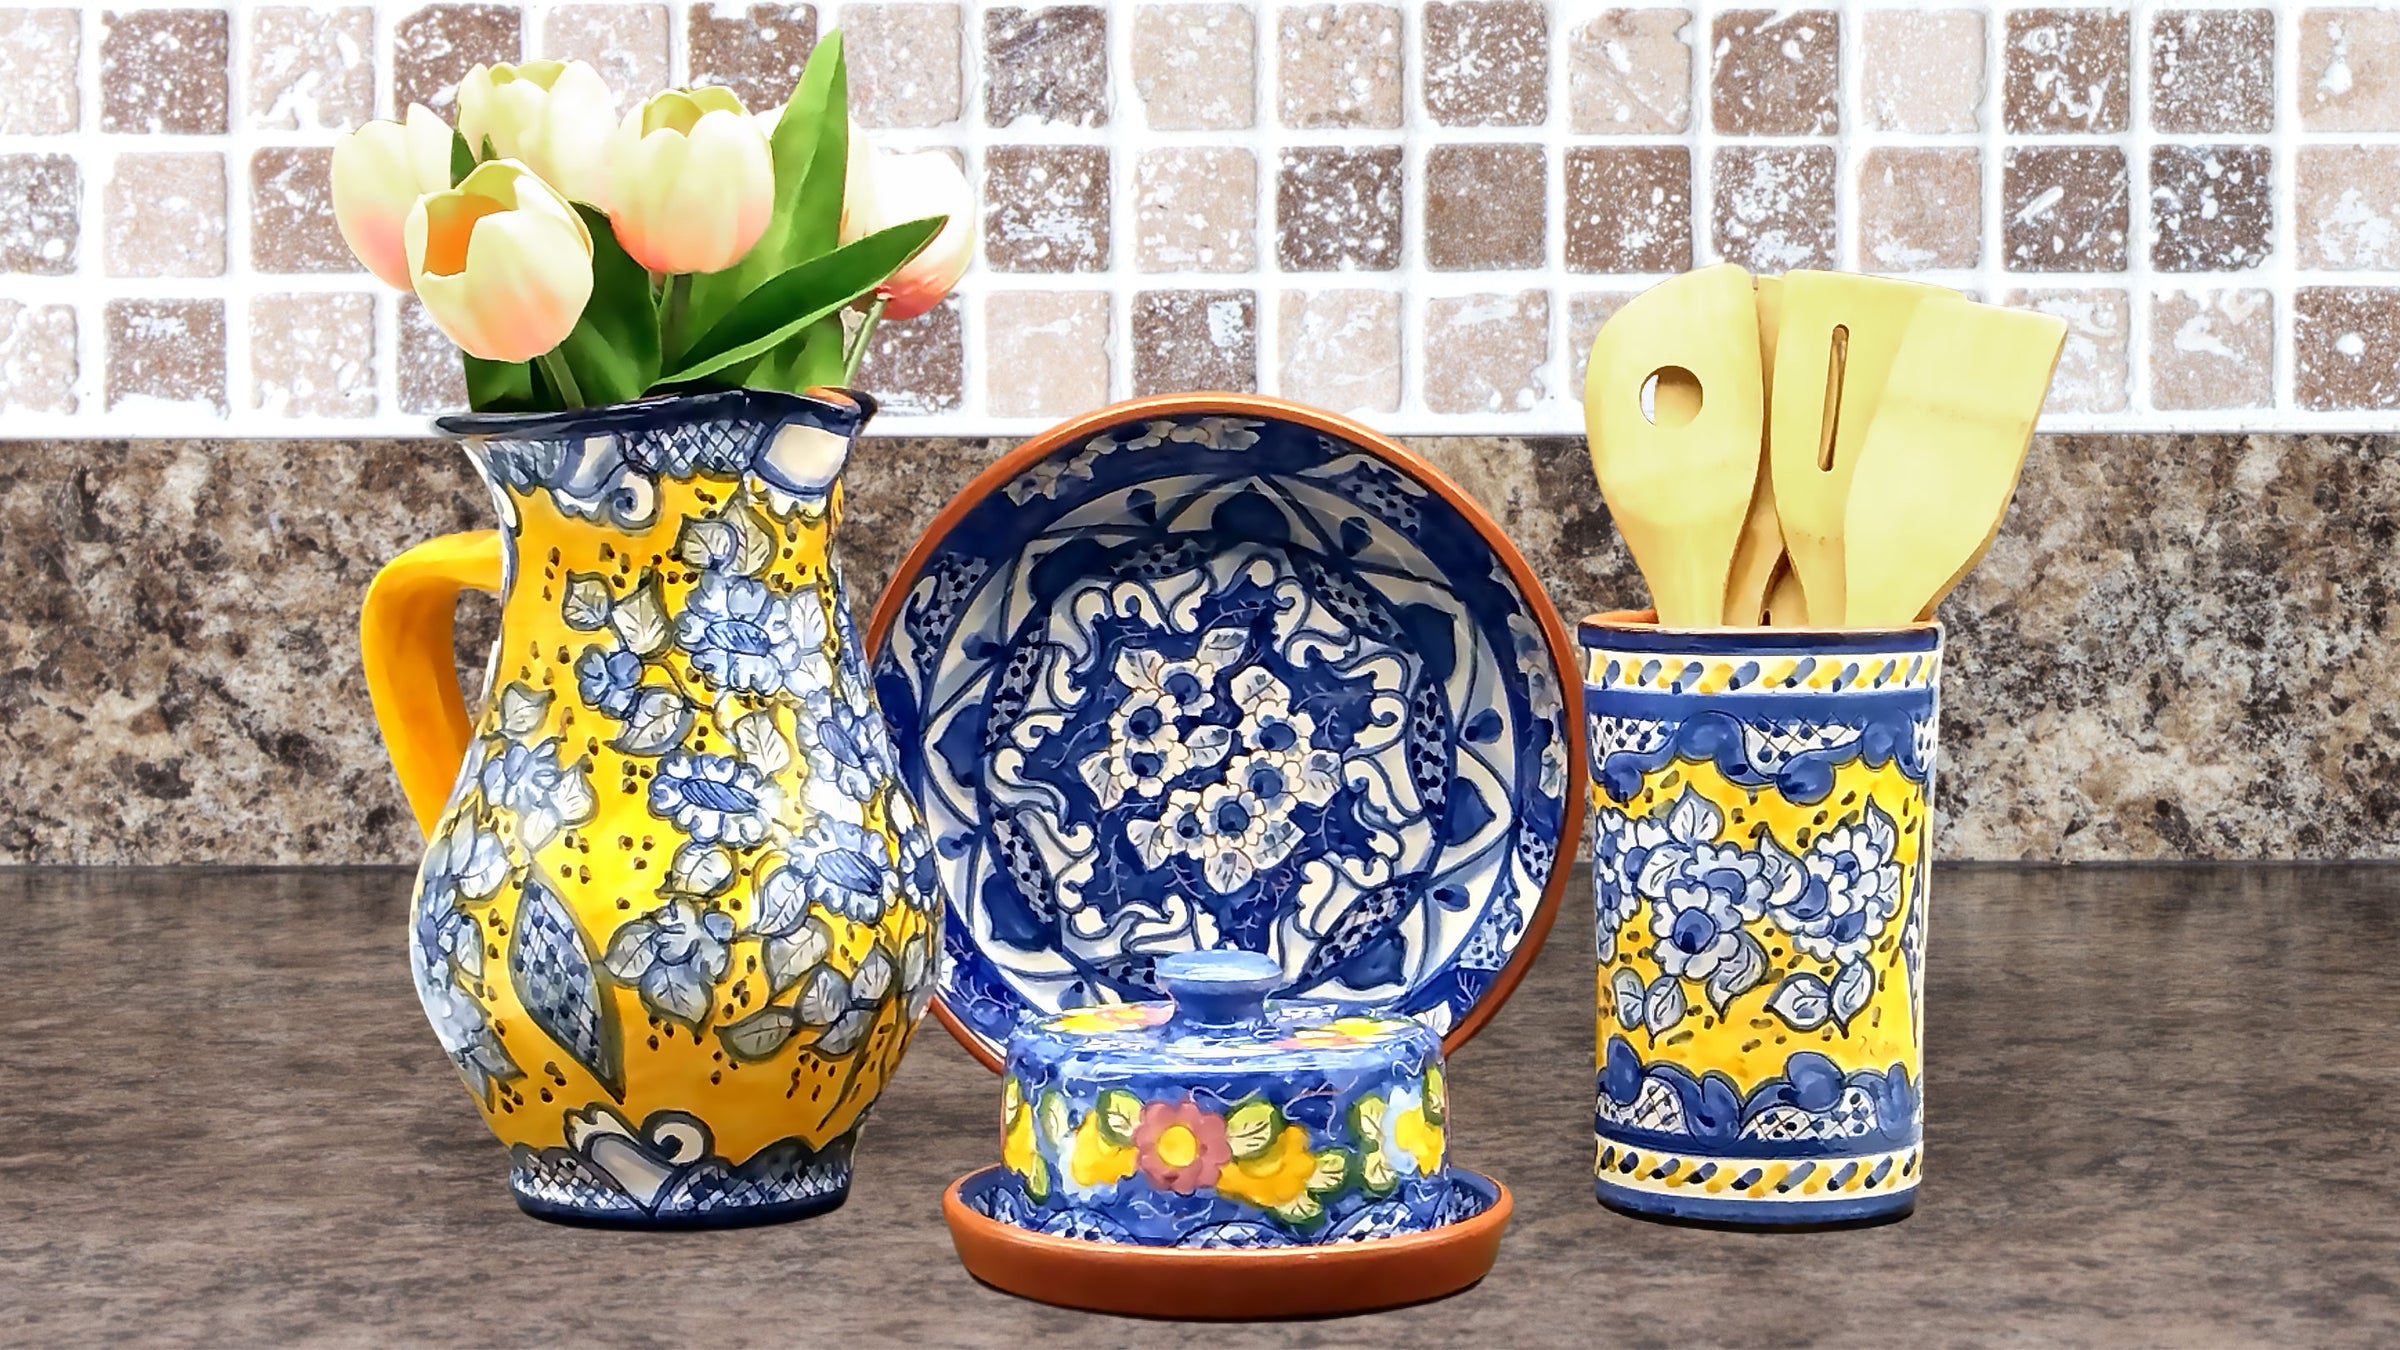 Olaria Pirraça - Traditional Portuguese Pottery from Alentejo